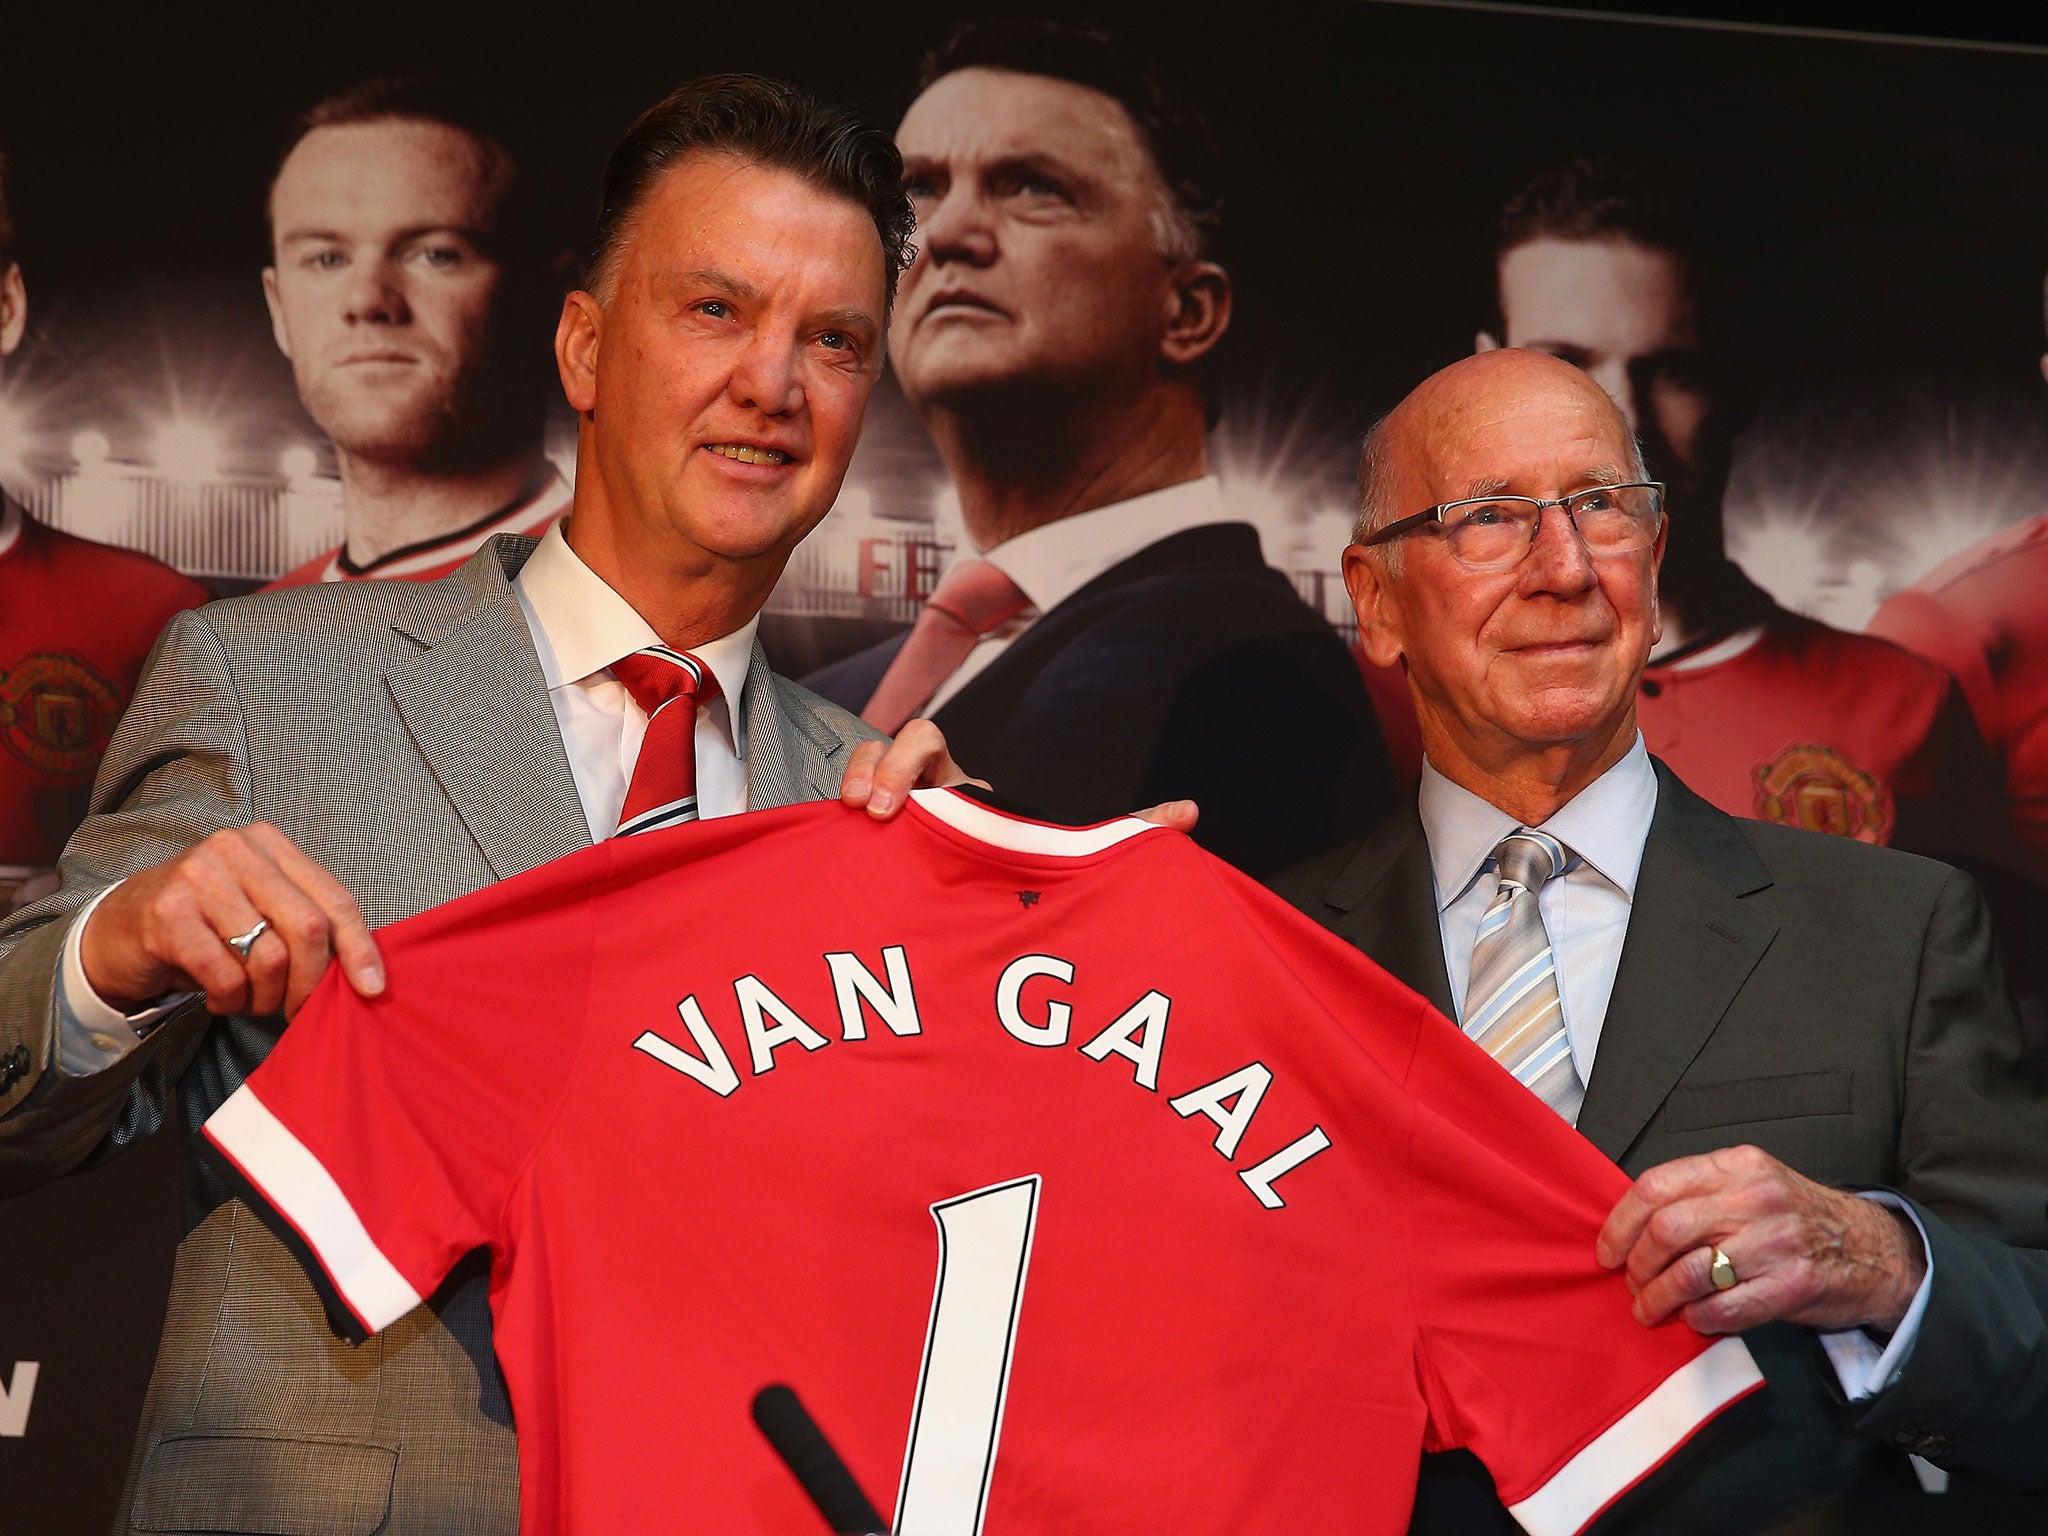 Louis van Gaal is unveiled at Manchester United alongside club ambassador Sir Bobby Charlton